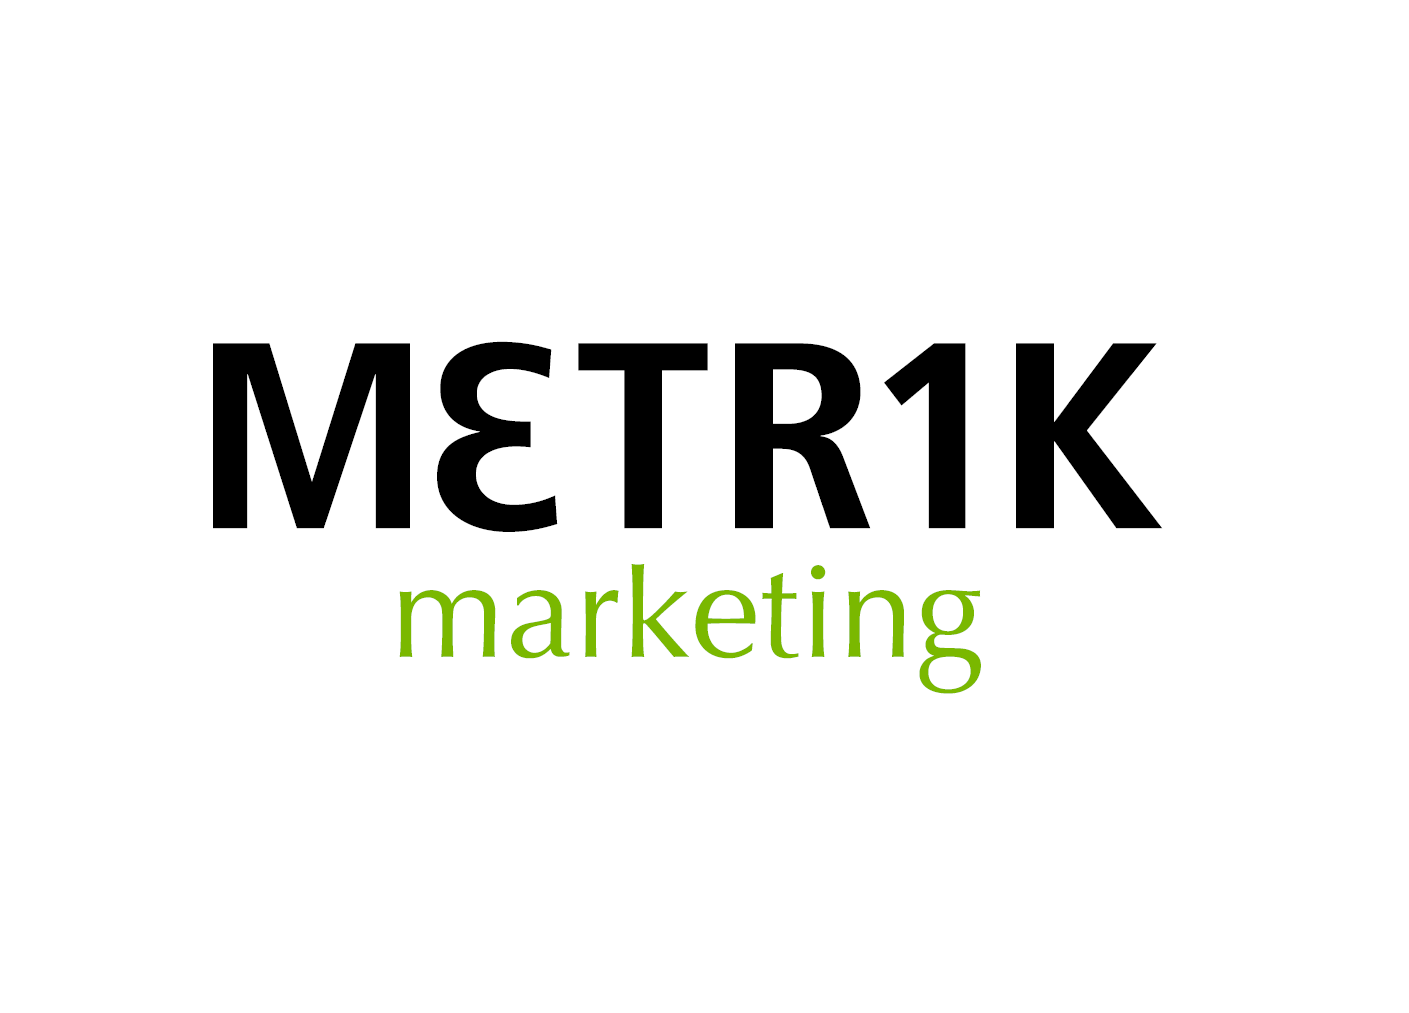 Metrik Marketing Inc profile on Qualified.One